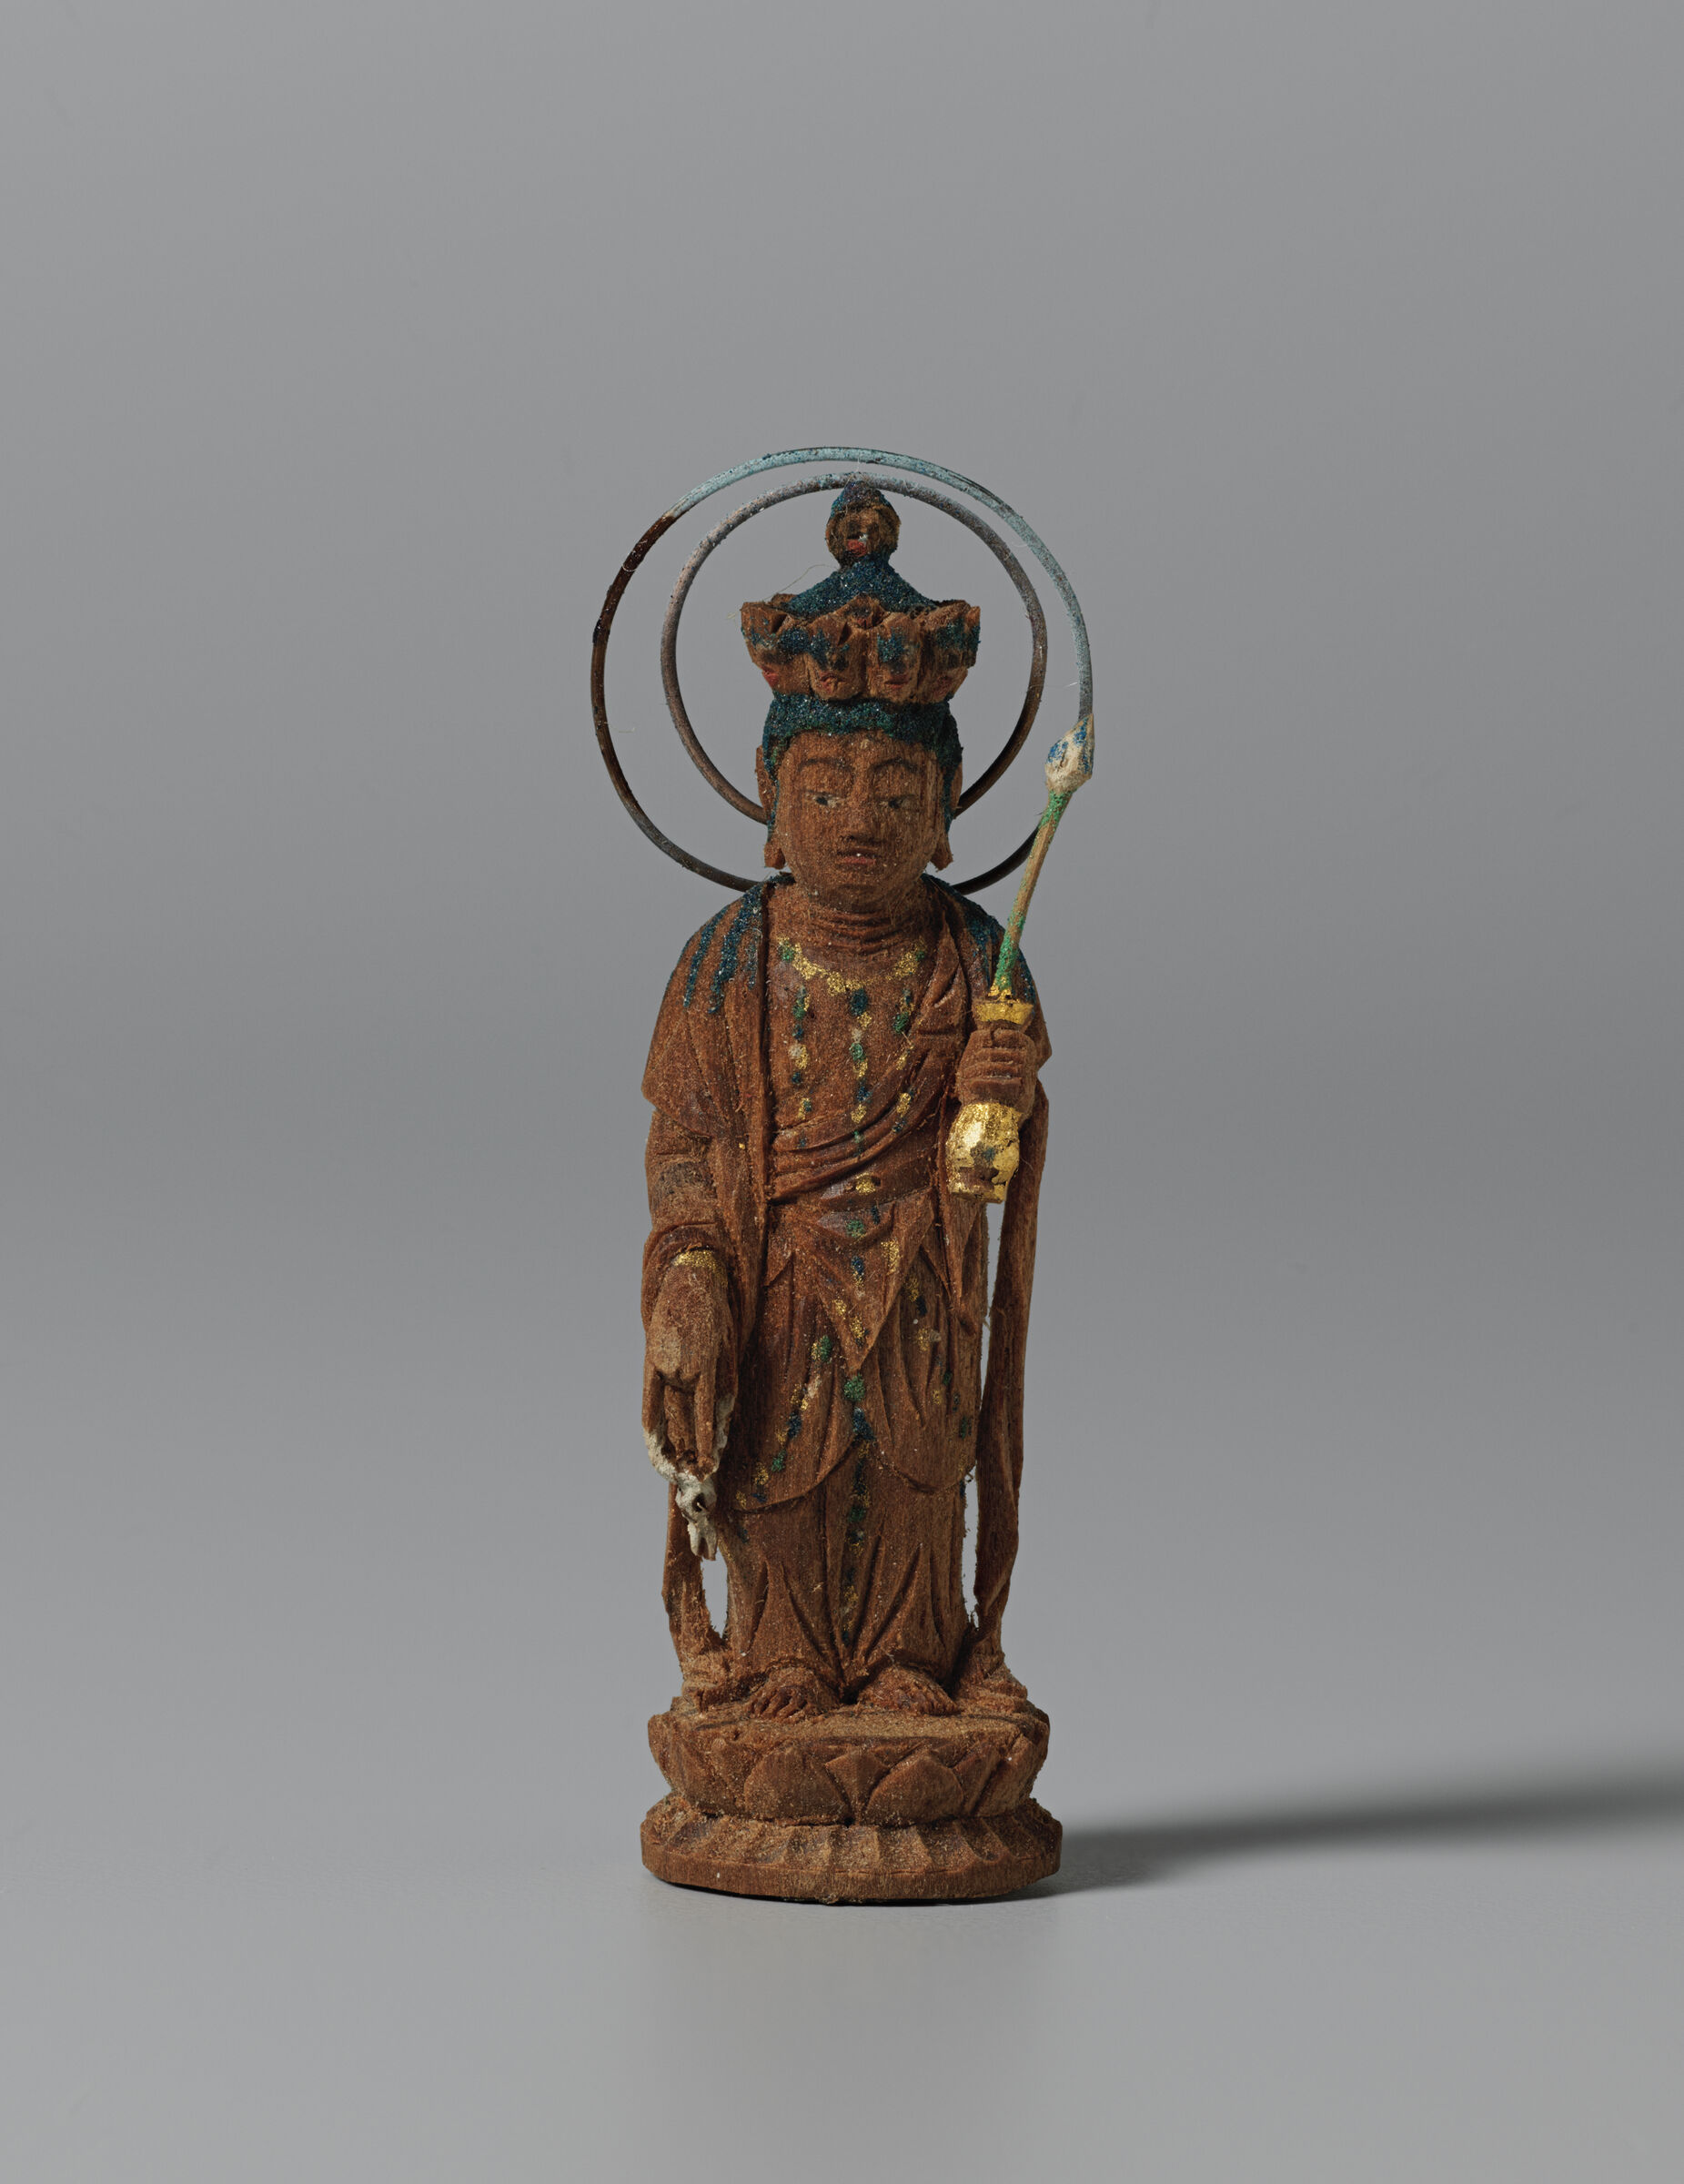 Small Image Of Eleven-Headed Avalokitesvara Bodhisattva (Japanese: Jūichimen Kannon) In A Cylindrical Shrine